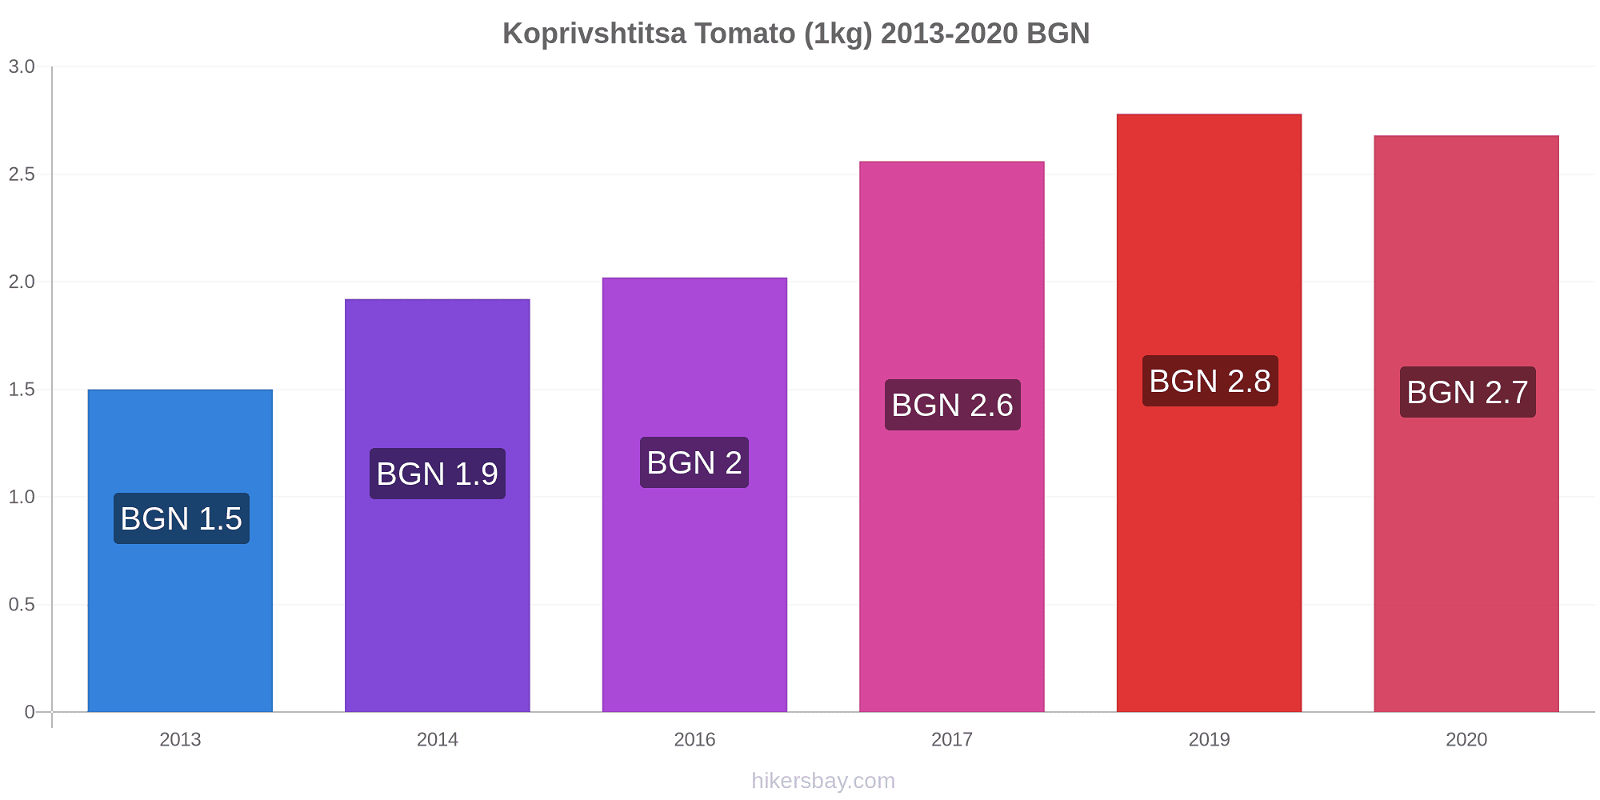 Koprivshtitsa price changes Tomato (1kg) hikersbay.com